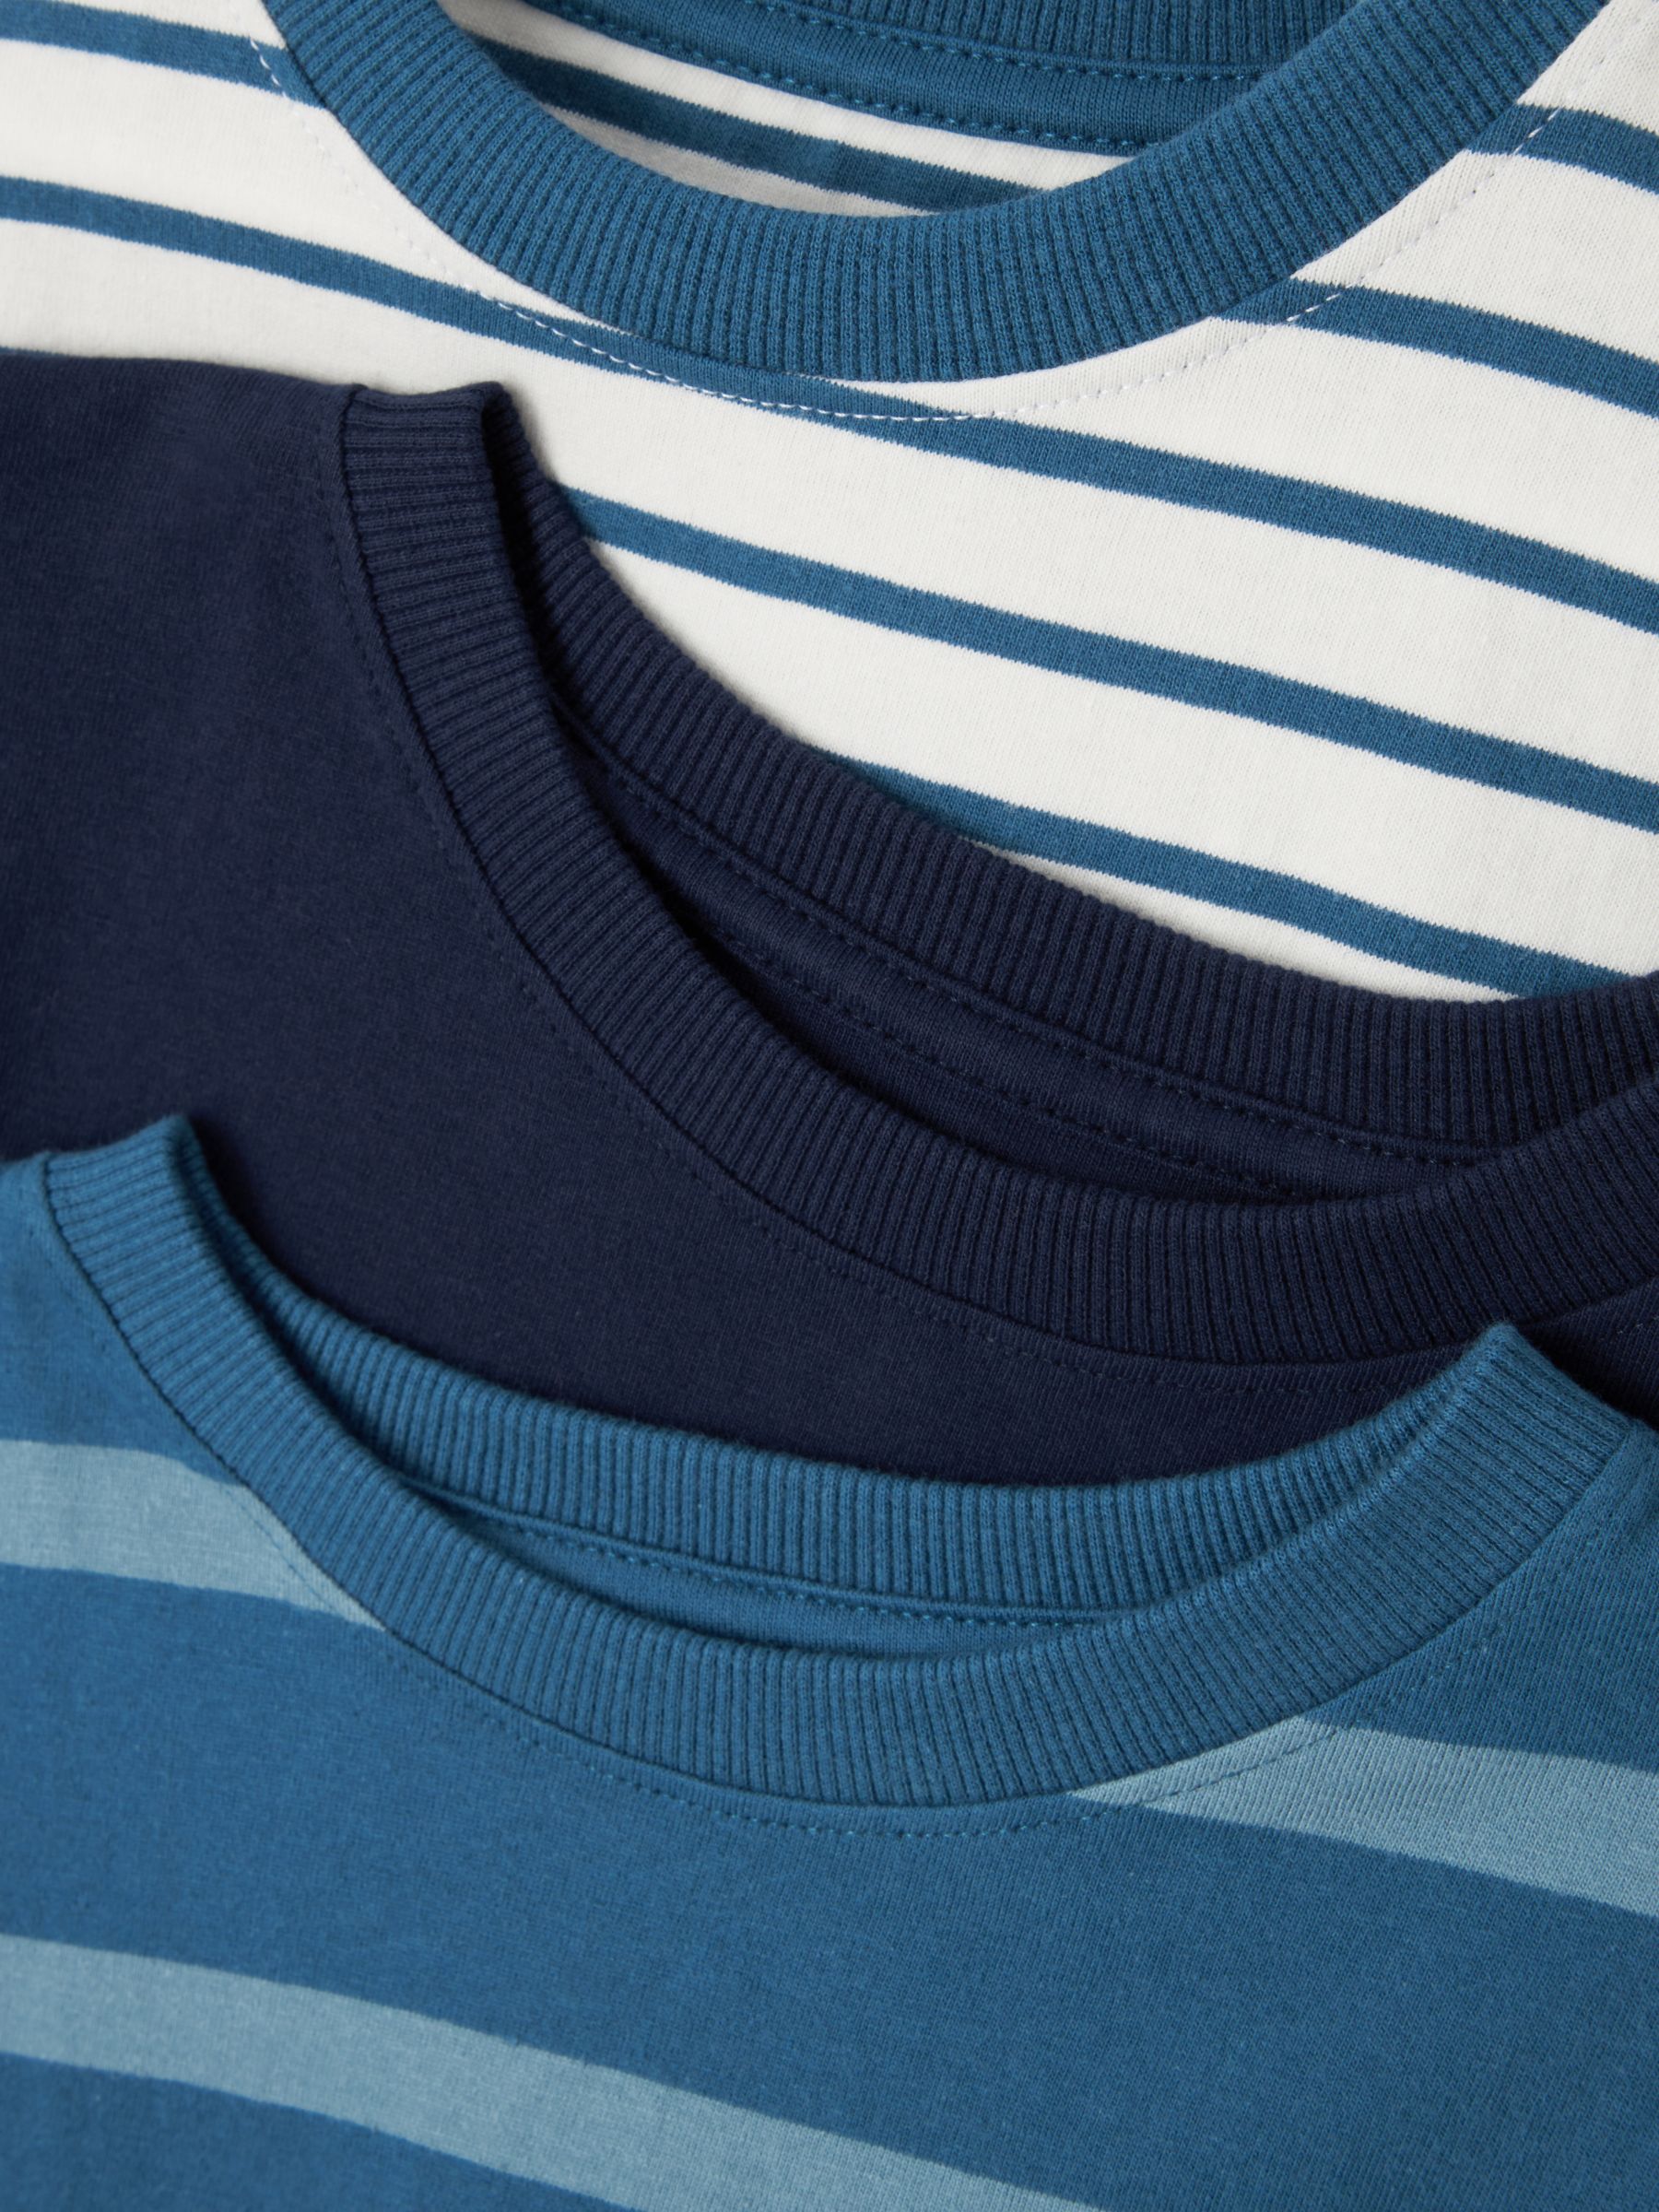 John Lewis Kids' Plain/Stripe T-Shirts, Pack of 3, Blue/Multi, 6 years